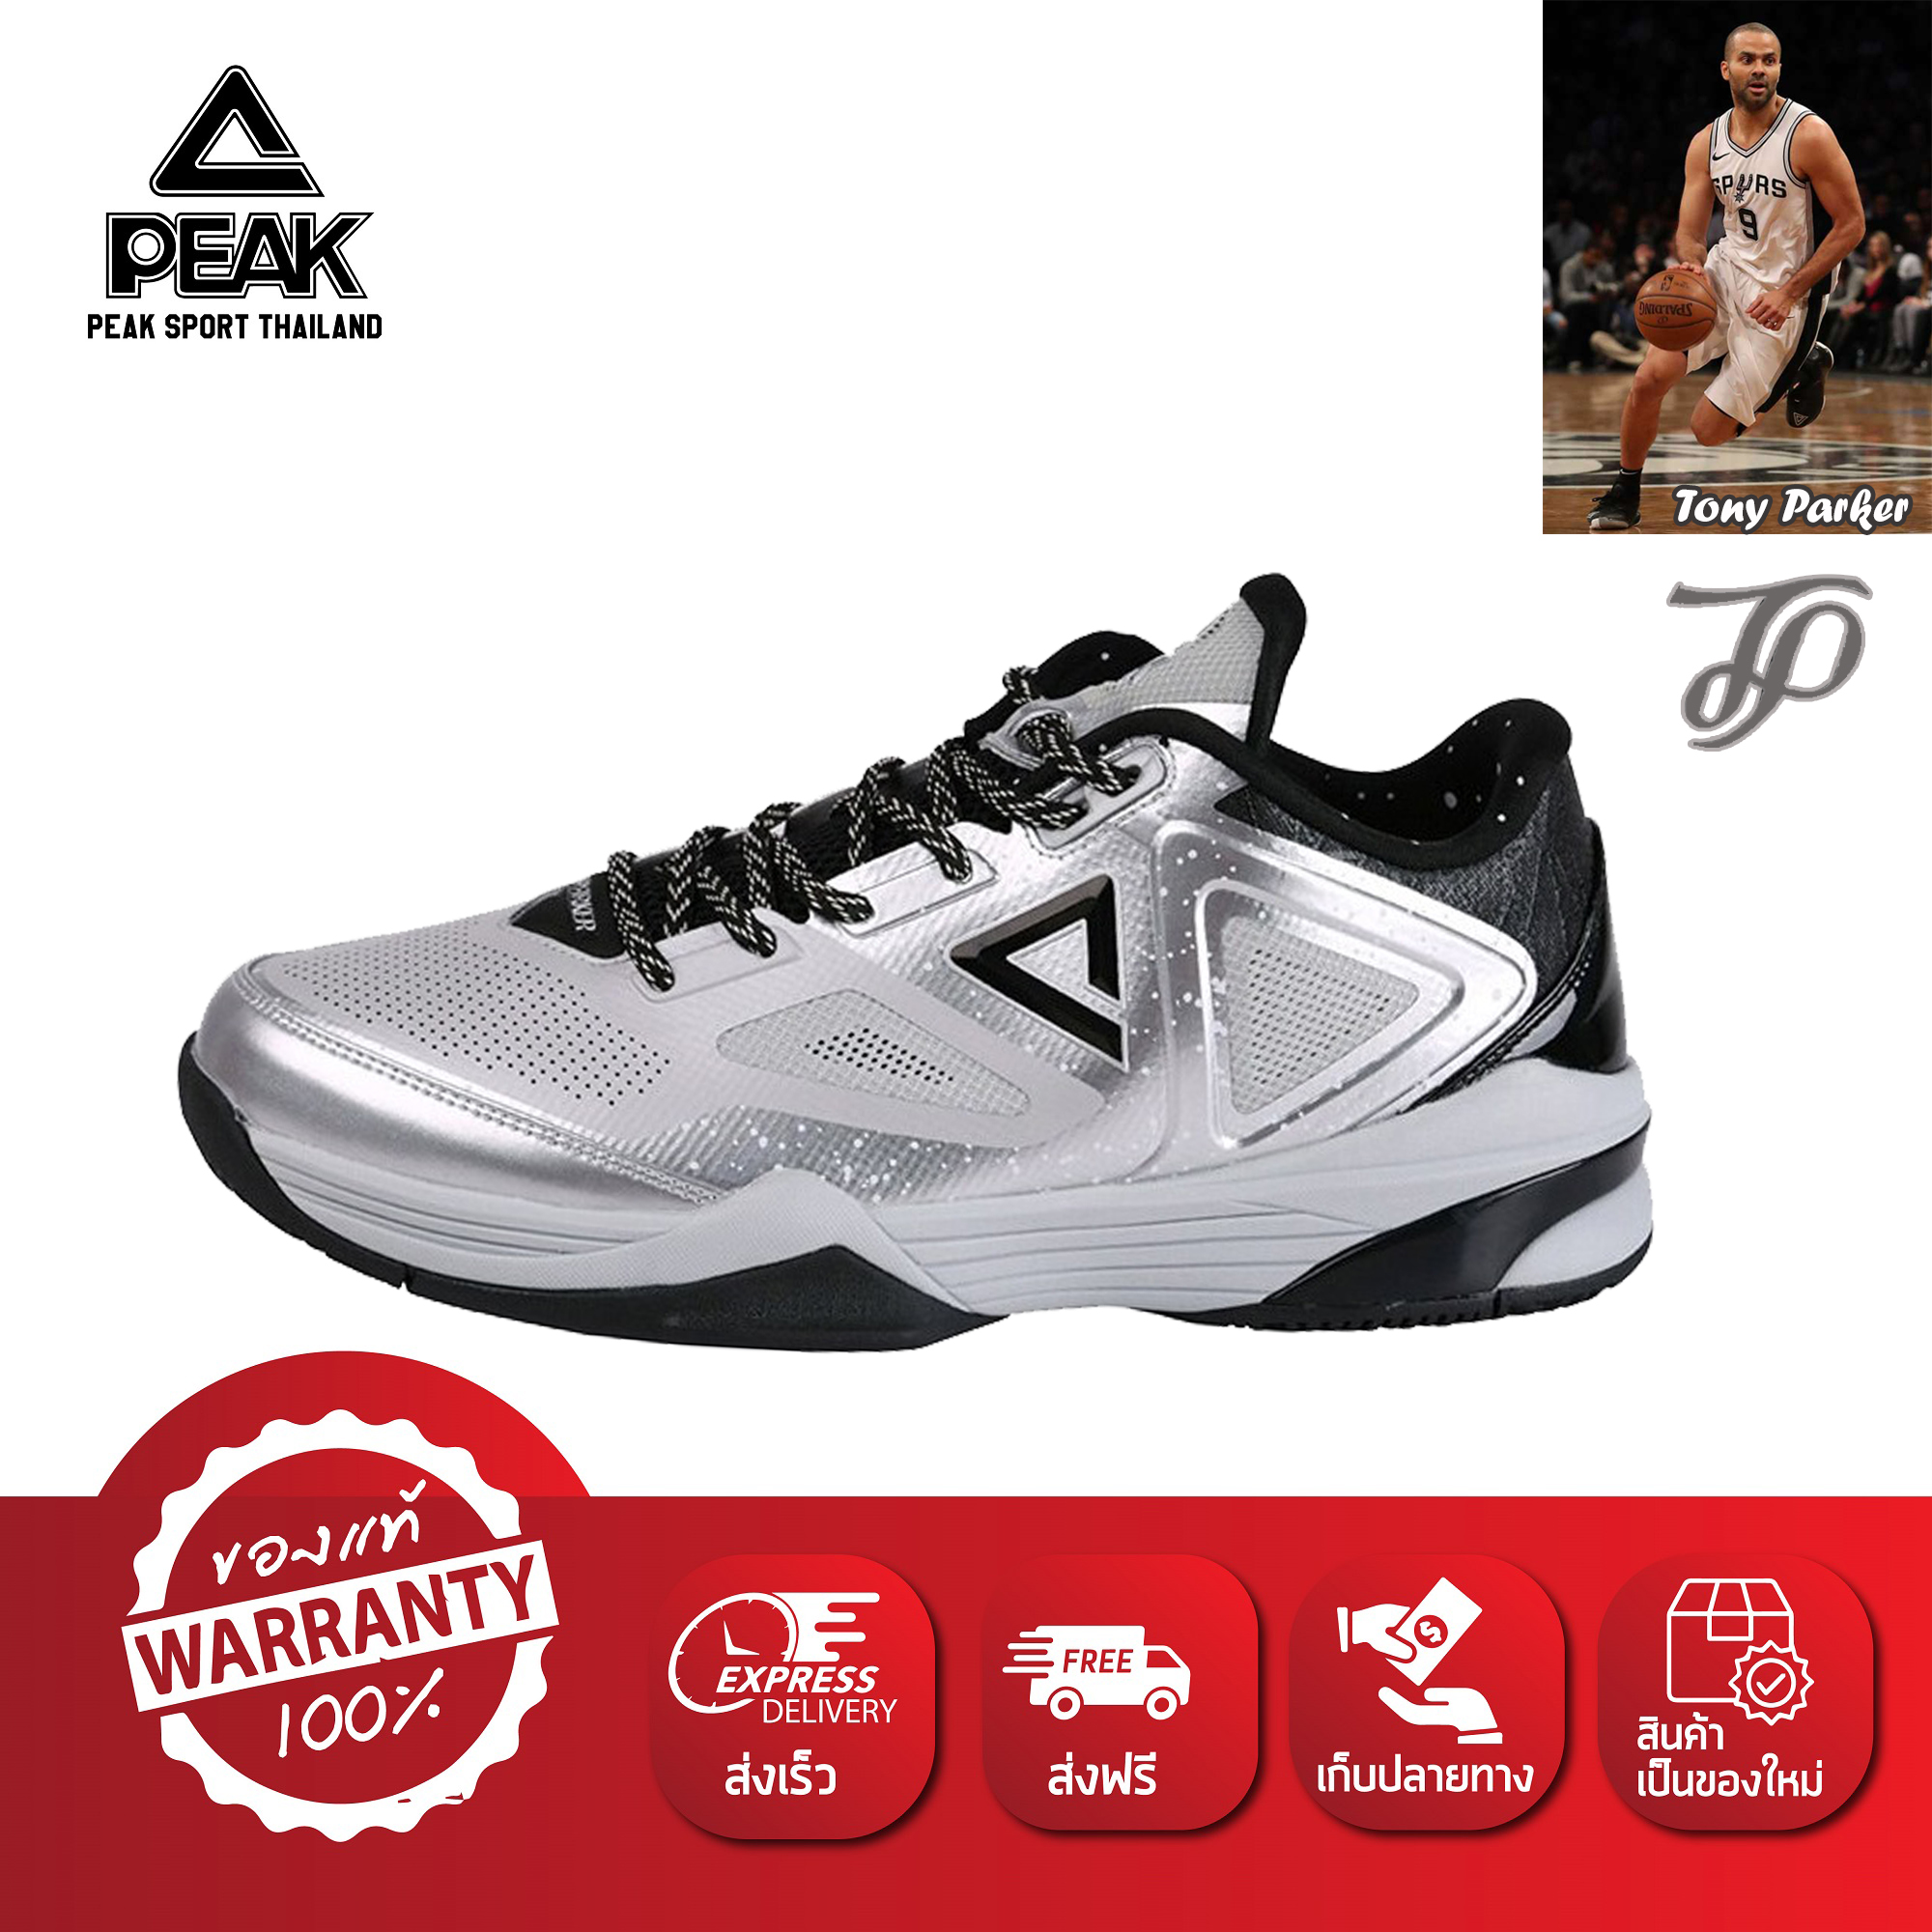 PEAK รองเท้า บาสเกตบอล ใช้แข่งขัน เอ็นบีเอ NBA Basketball shoes TP9-III พีค รุ่น E61323A - Silver